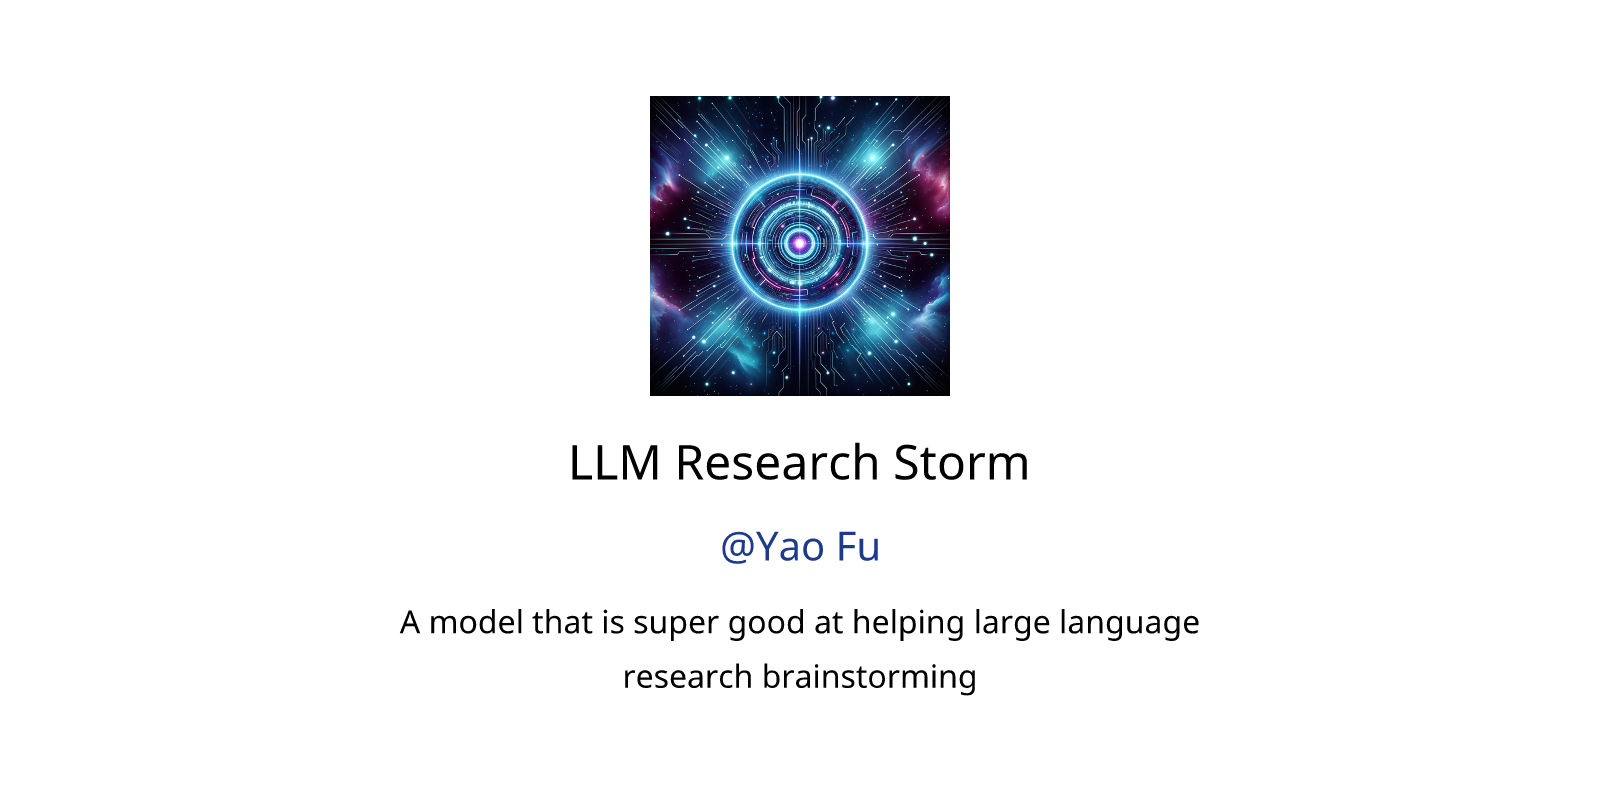 llm research